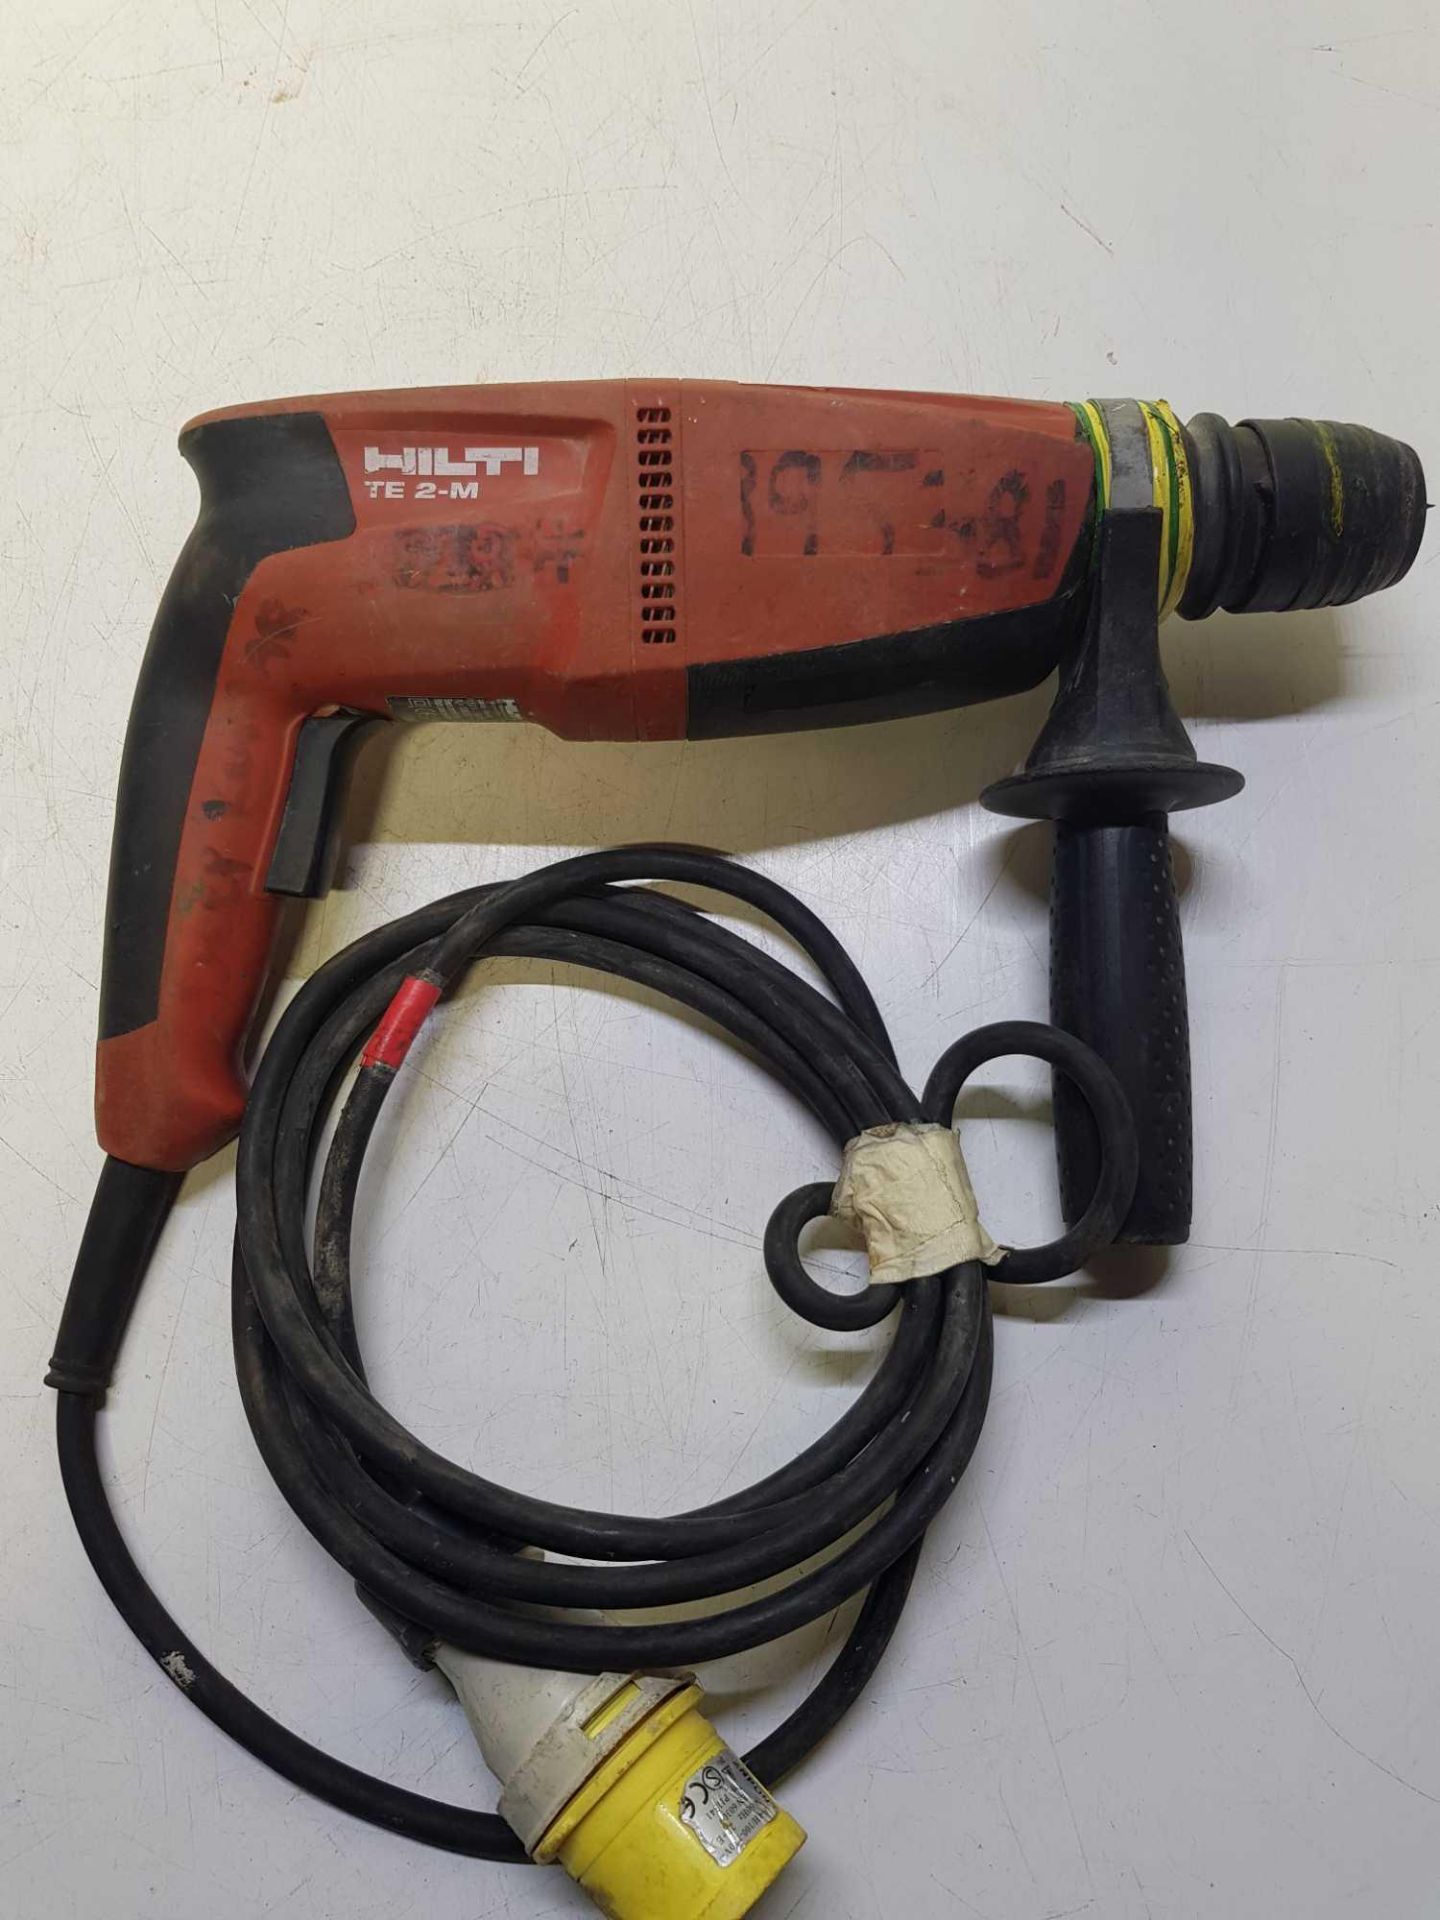 Hilti 110v rotary hammer drill - Image 2 of 2